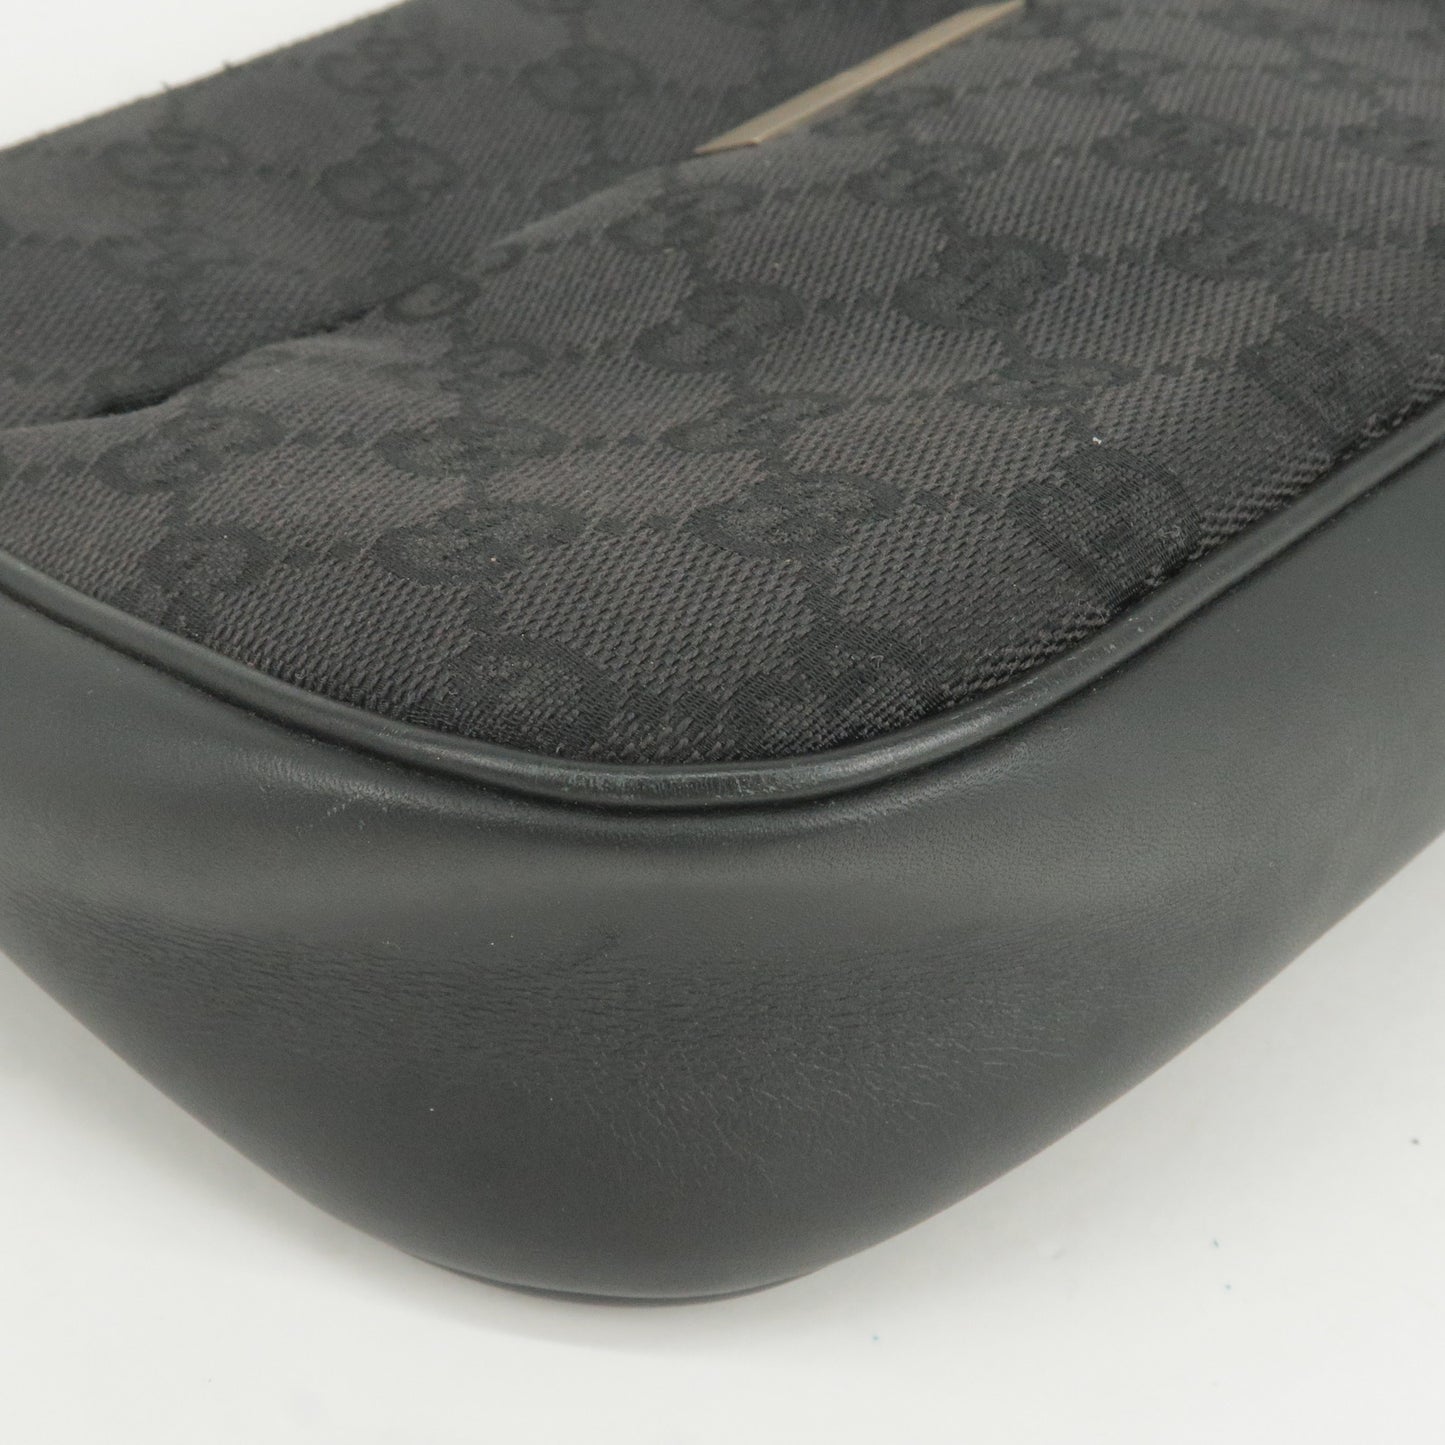 GUCCI Bamboo GG Canvas Leather Shoulder Bag Black 001.3870